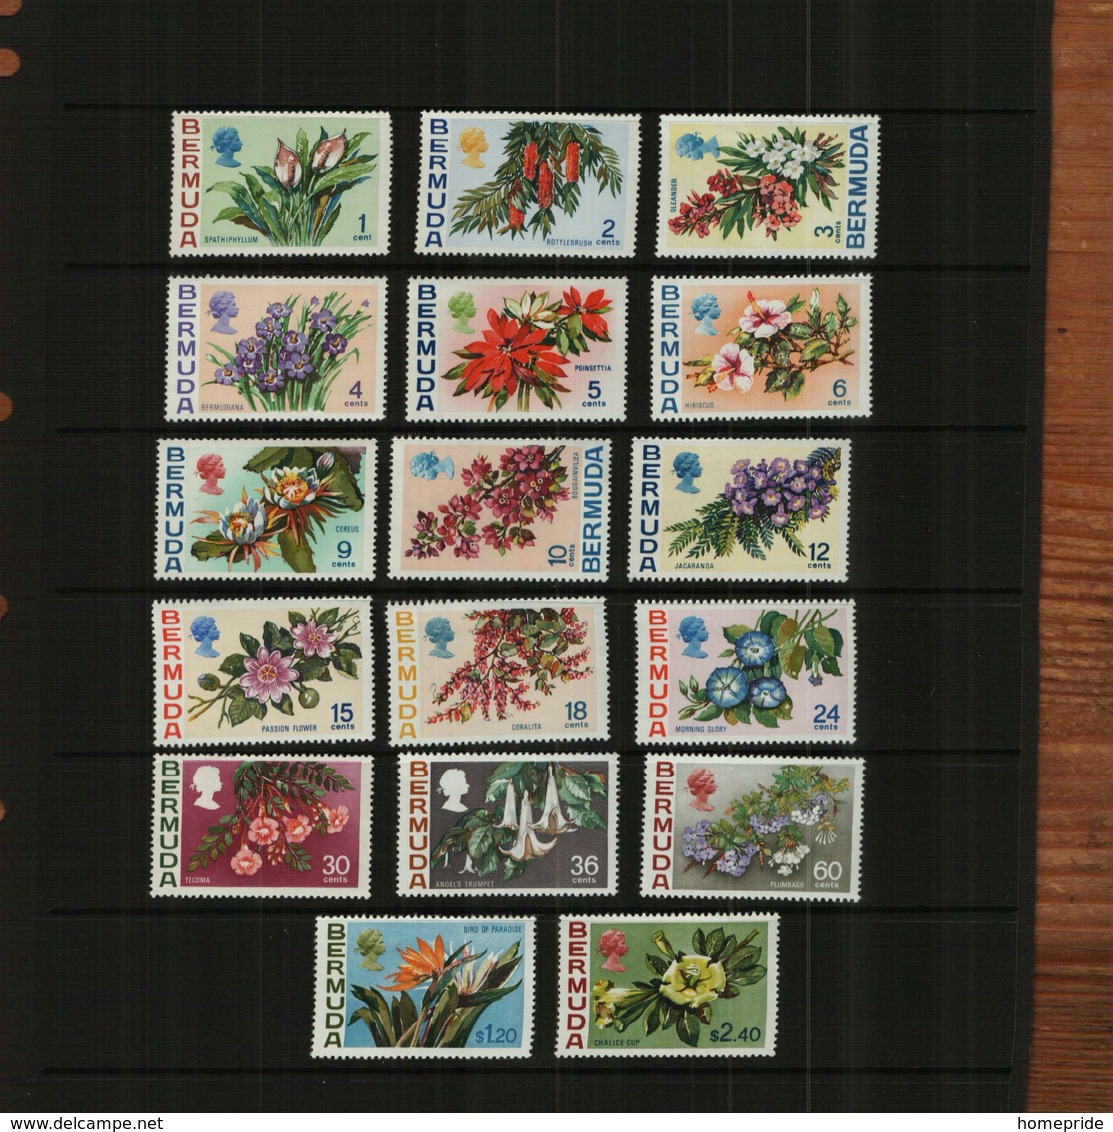 BERMUDA - 1970 - FLOWERS - 17 Stamps - MNH - Bermuda